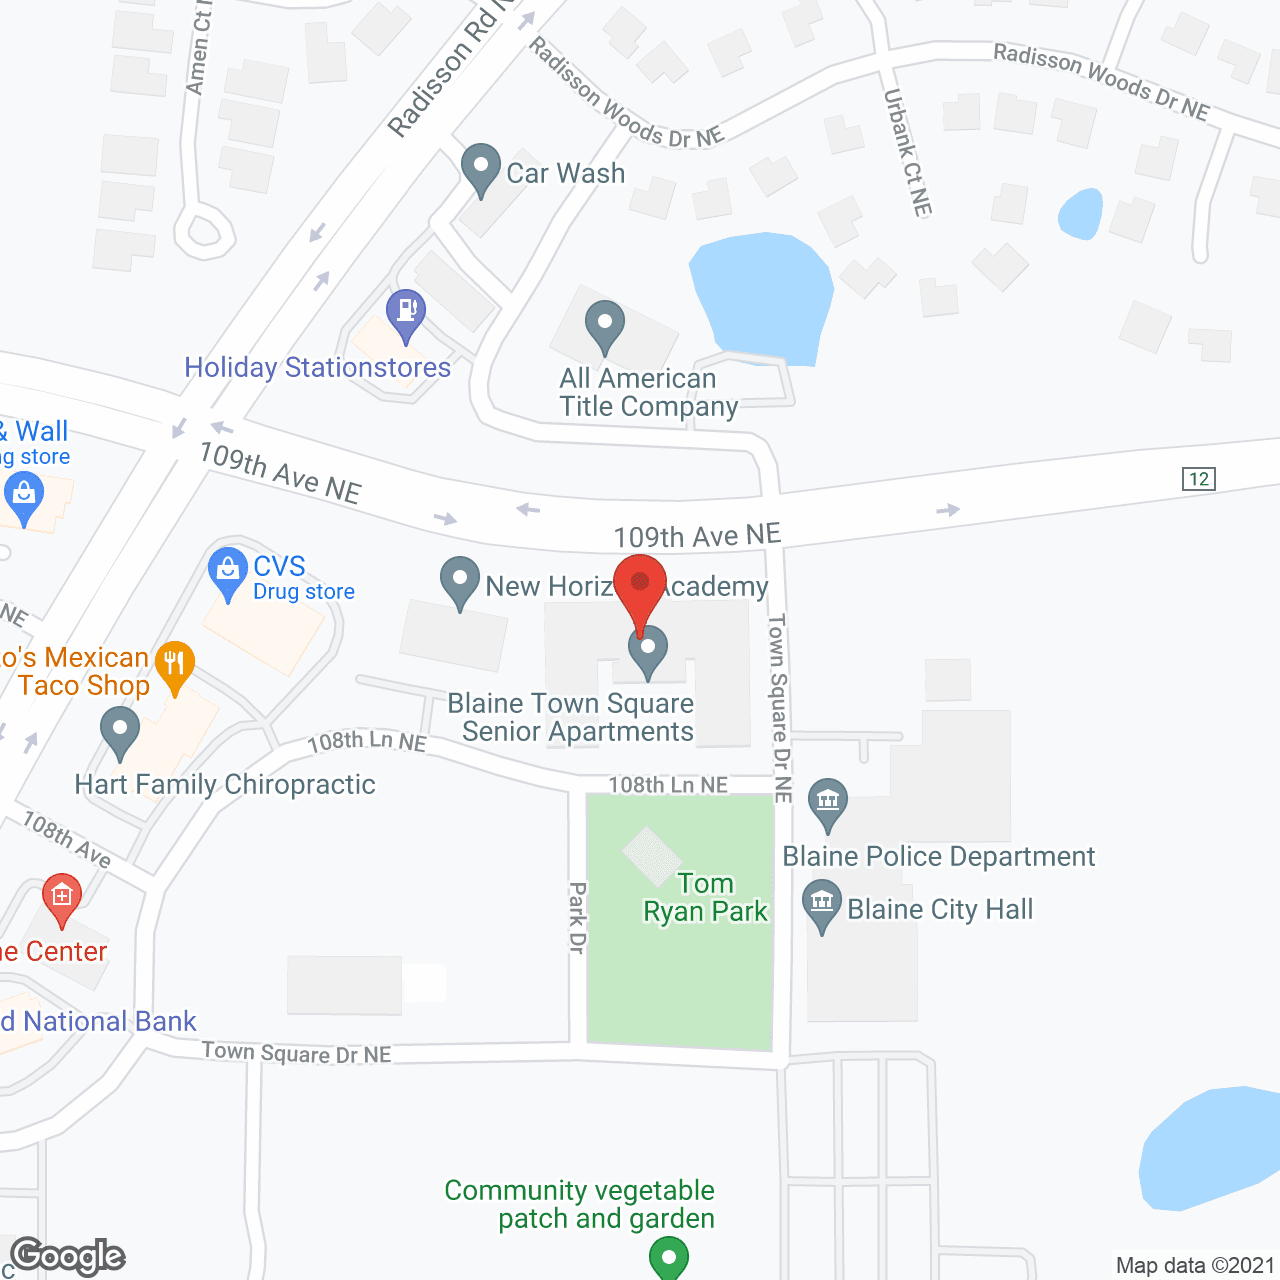 Blaine Town Square Senior Apartments in google map